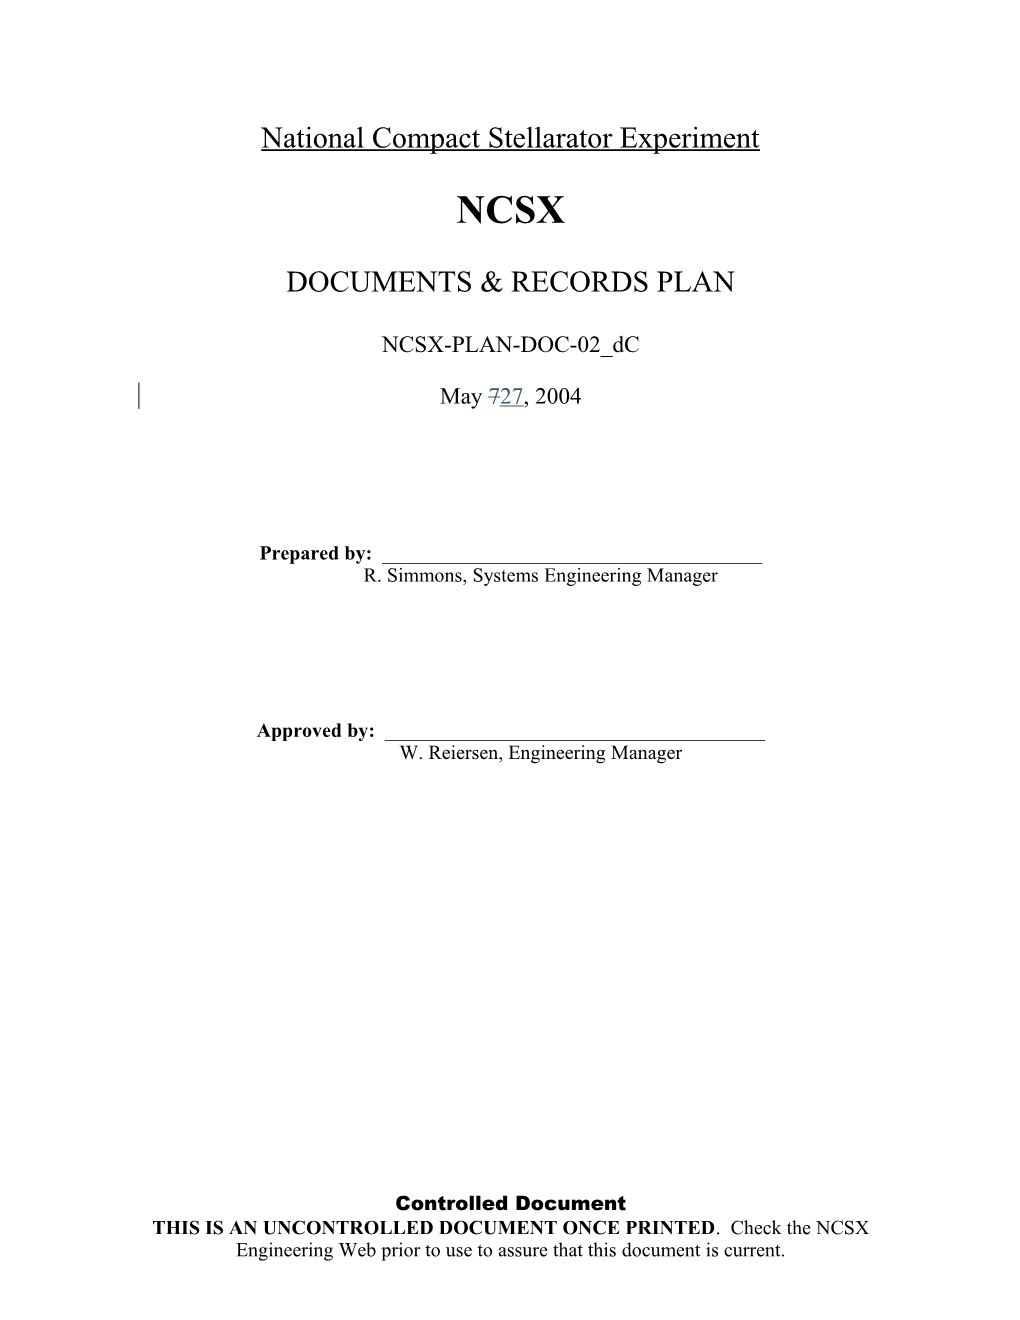 NSTX Documentation & Records Plan